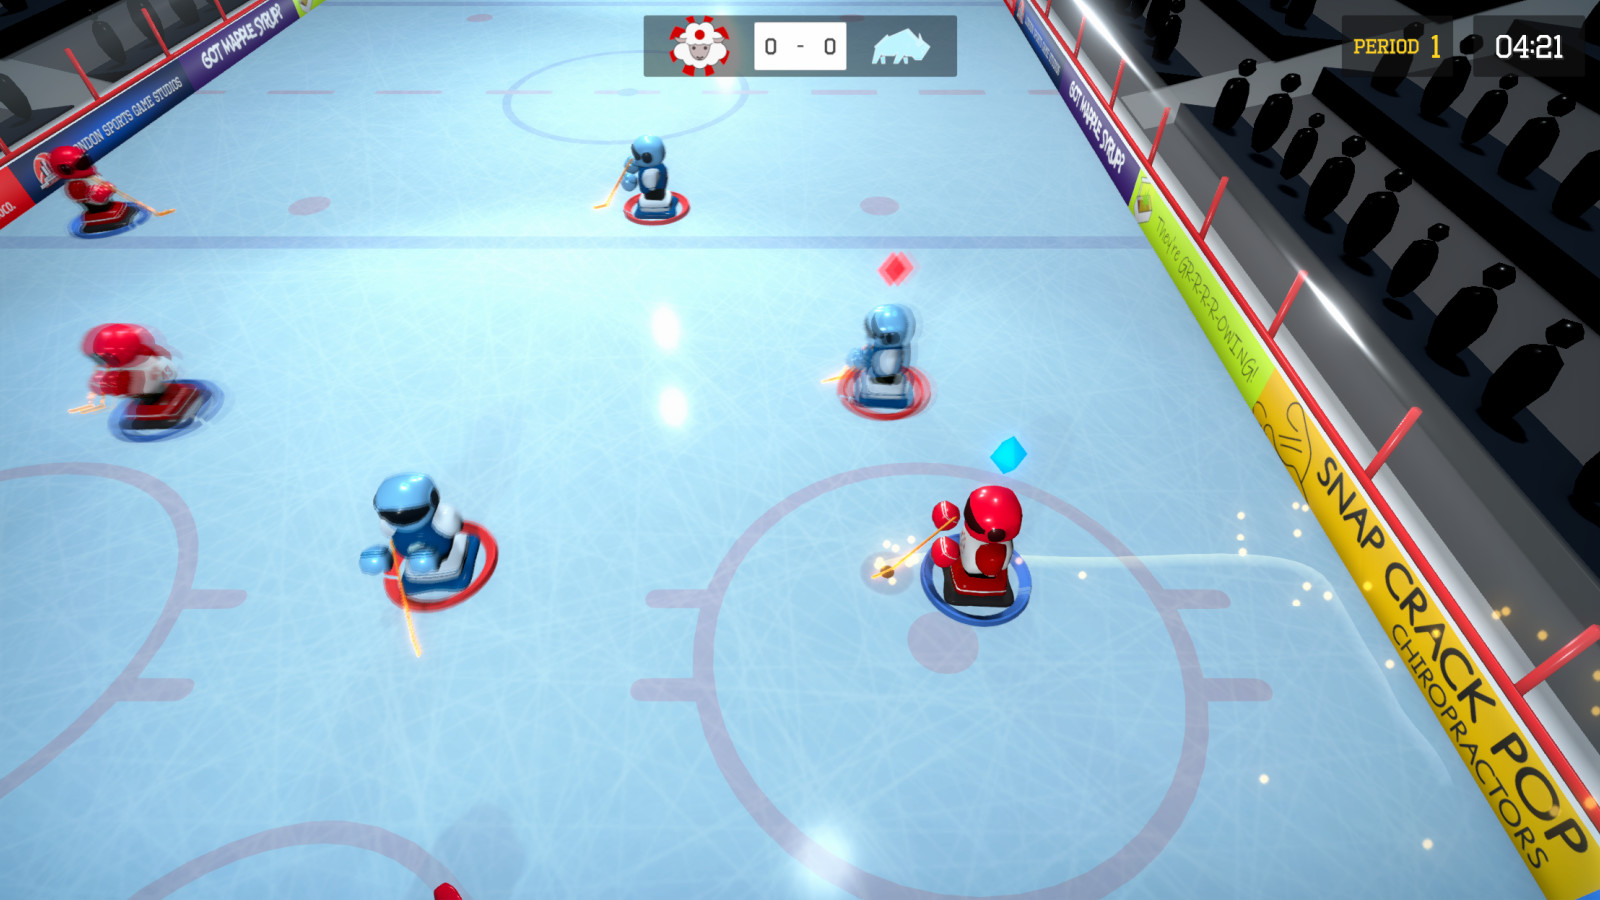 3 on 3 Super Robot Hockey Free Download